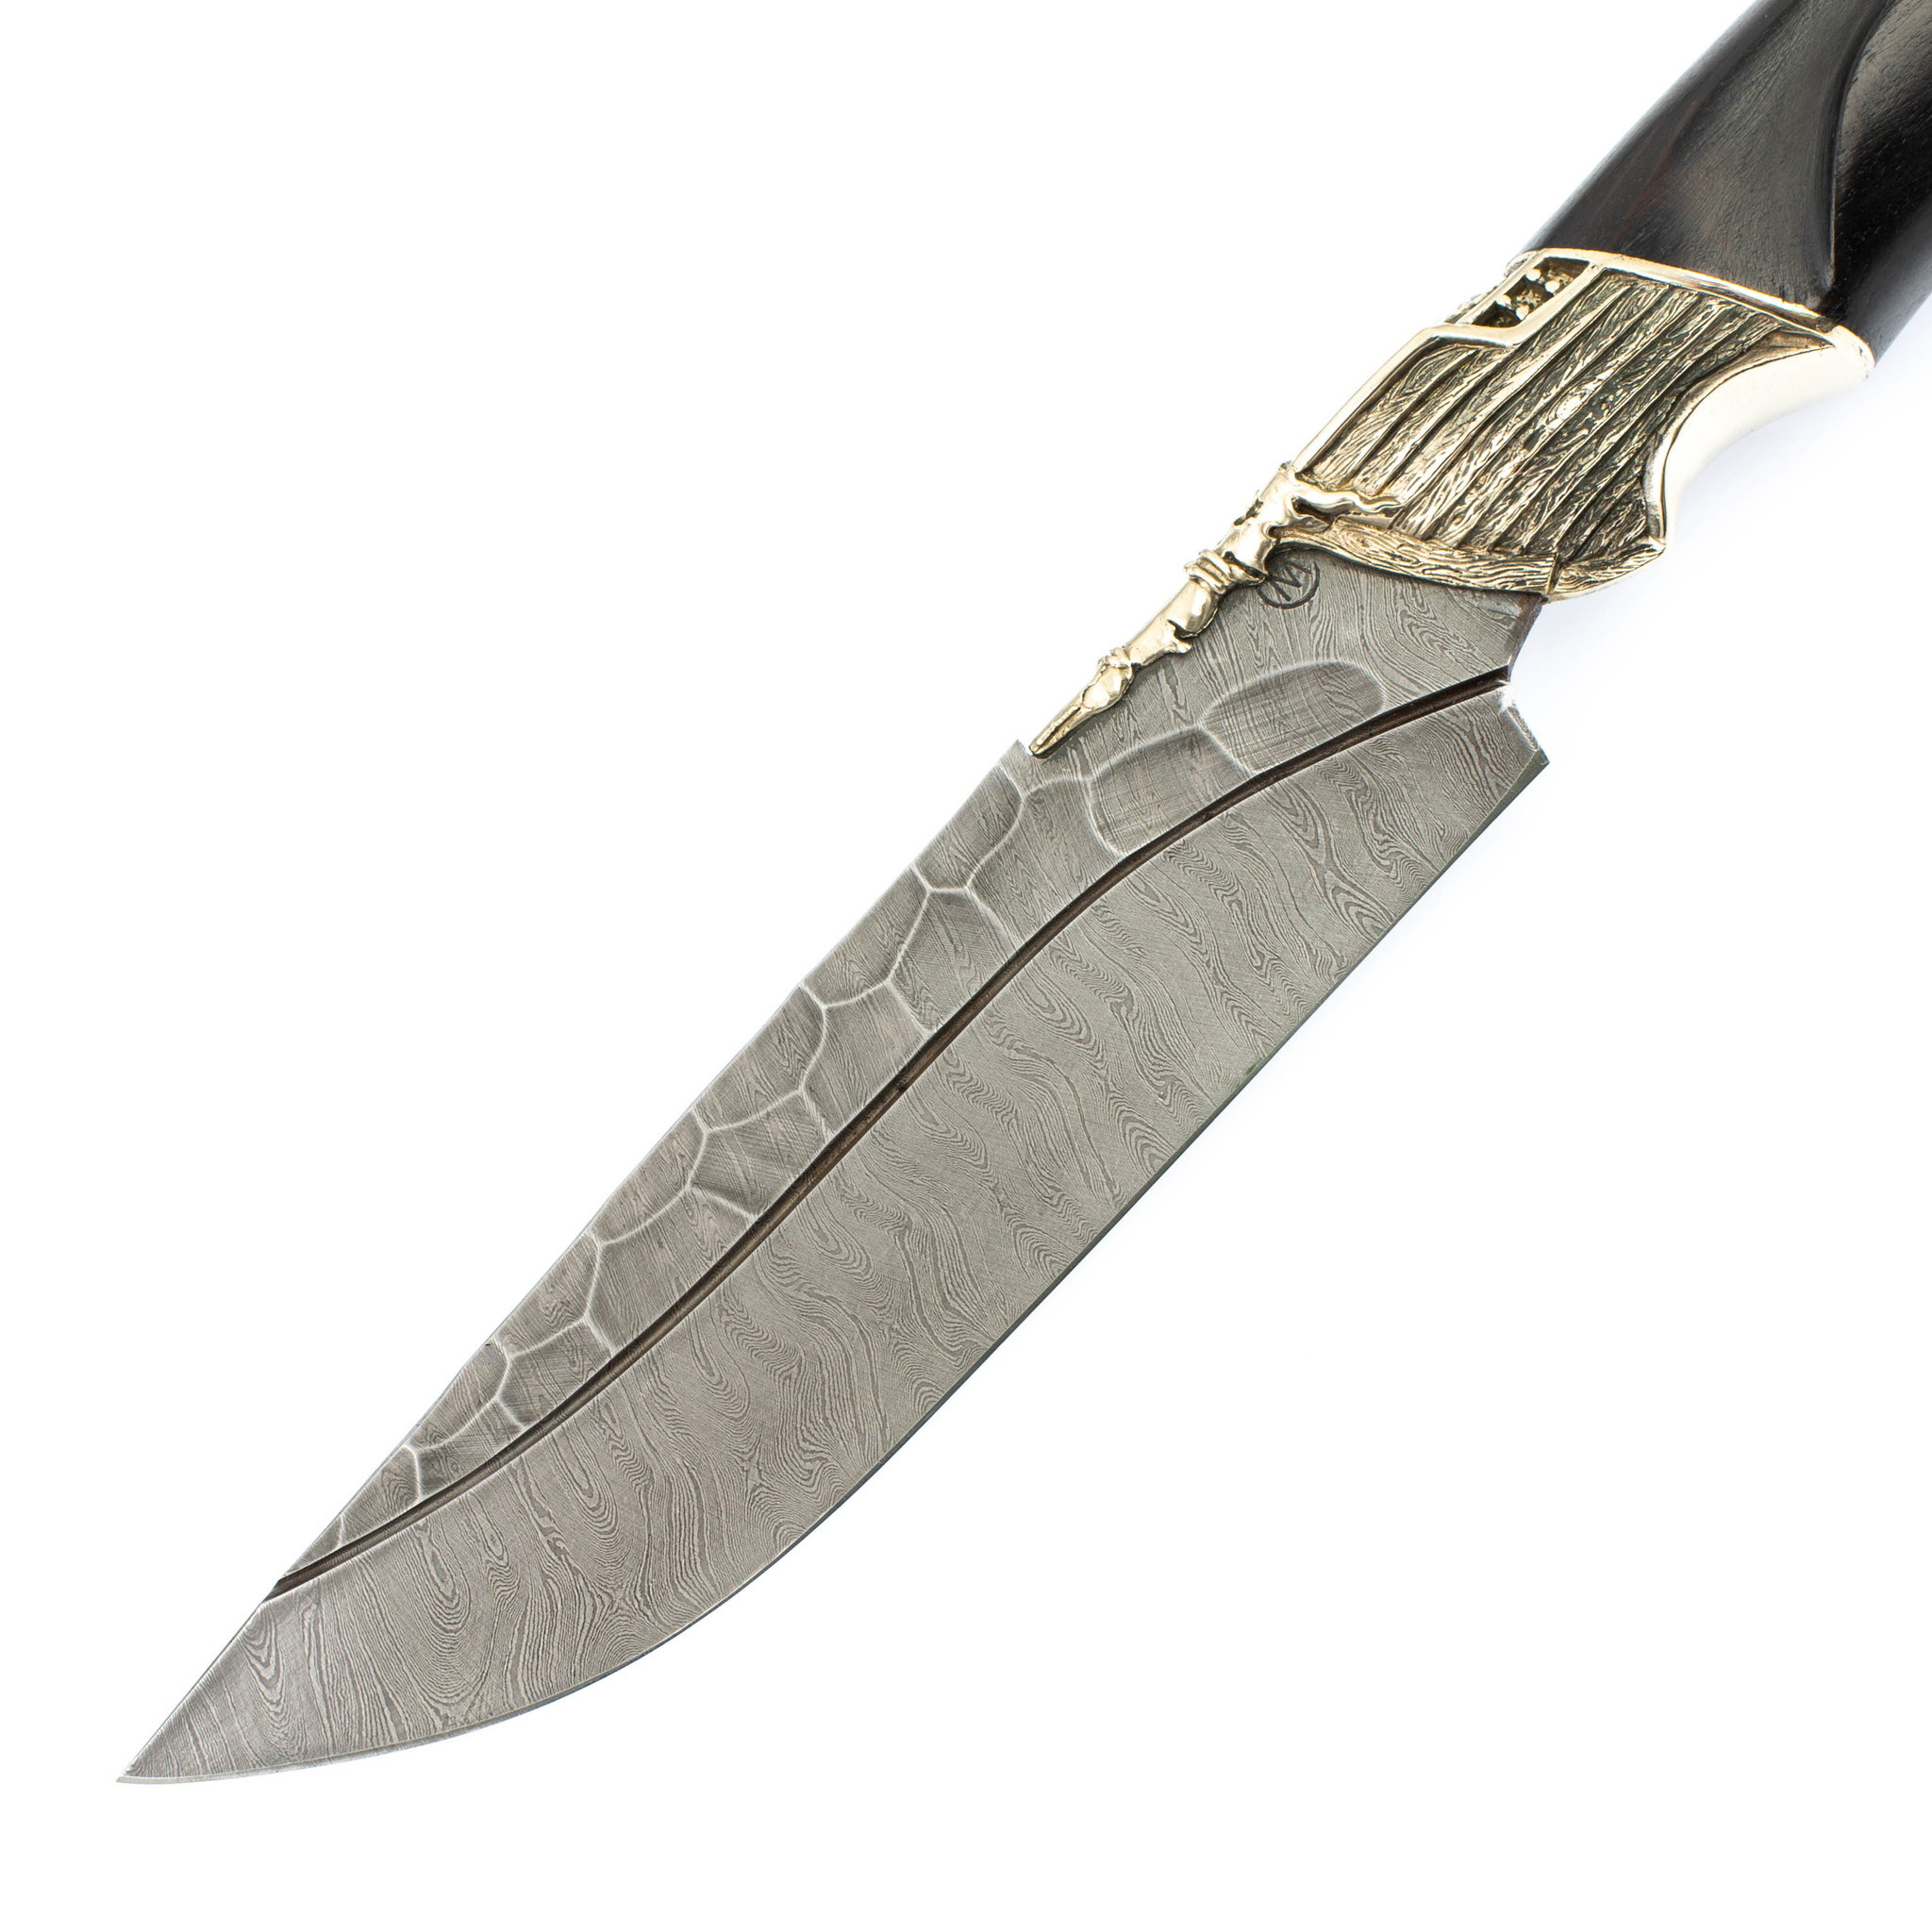 Нож Путник с резной рукоятью, дамасская сталь - фото 2